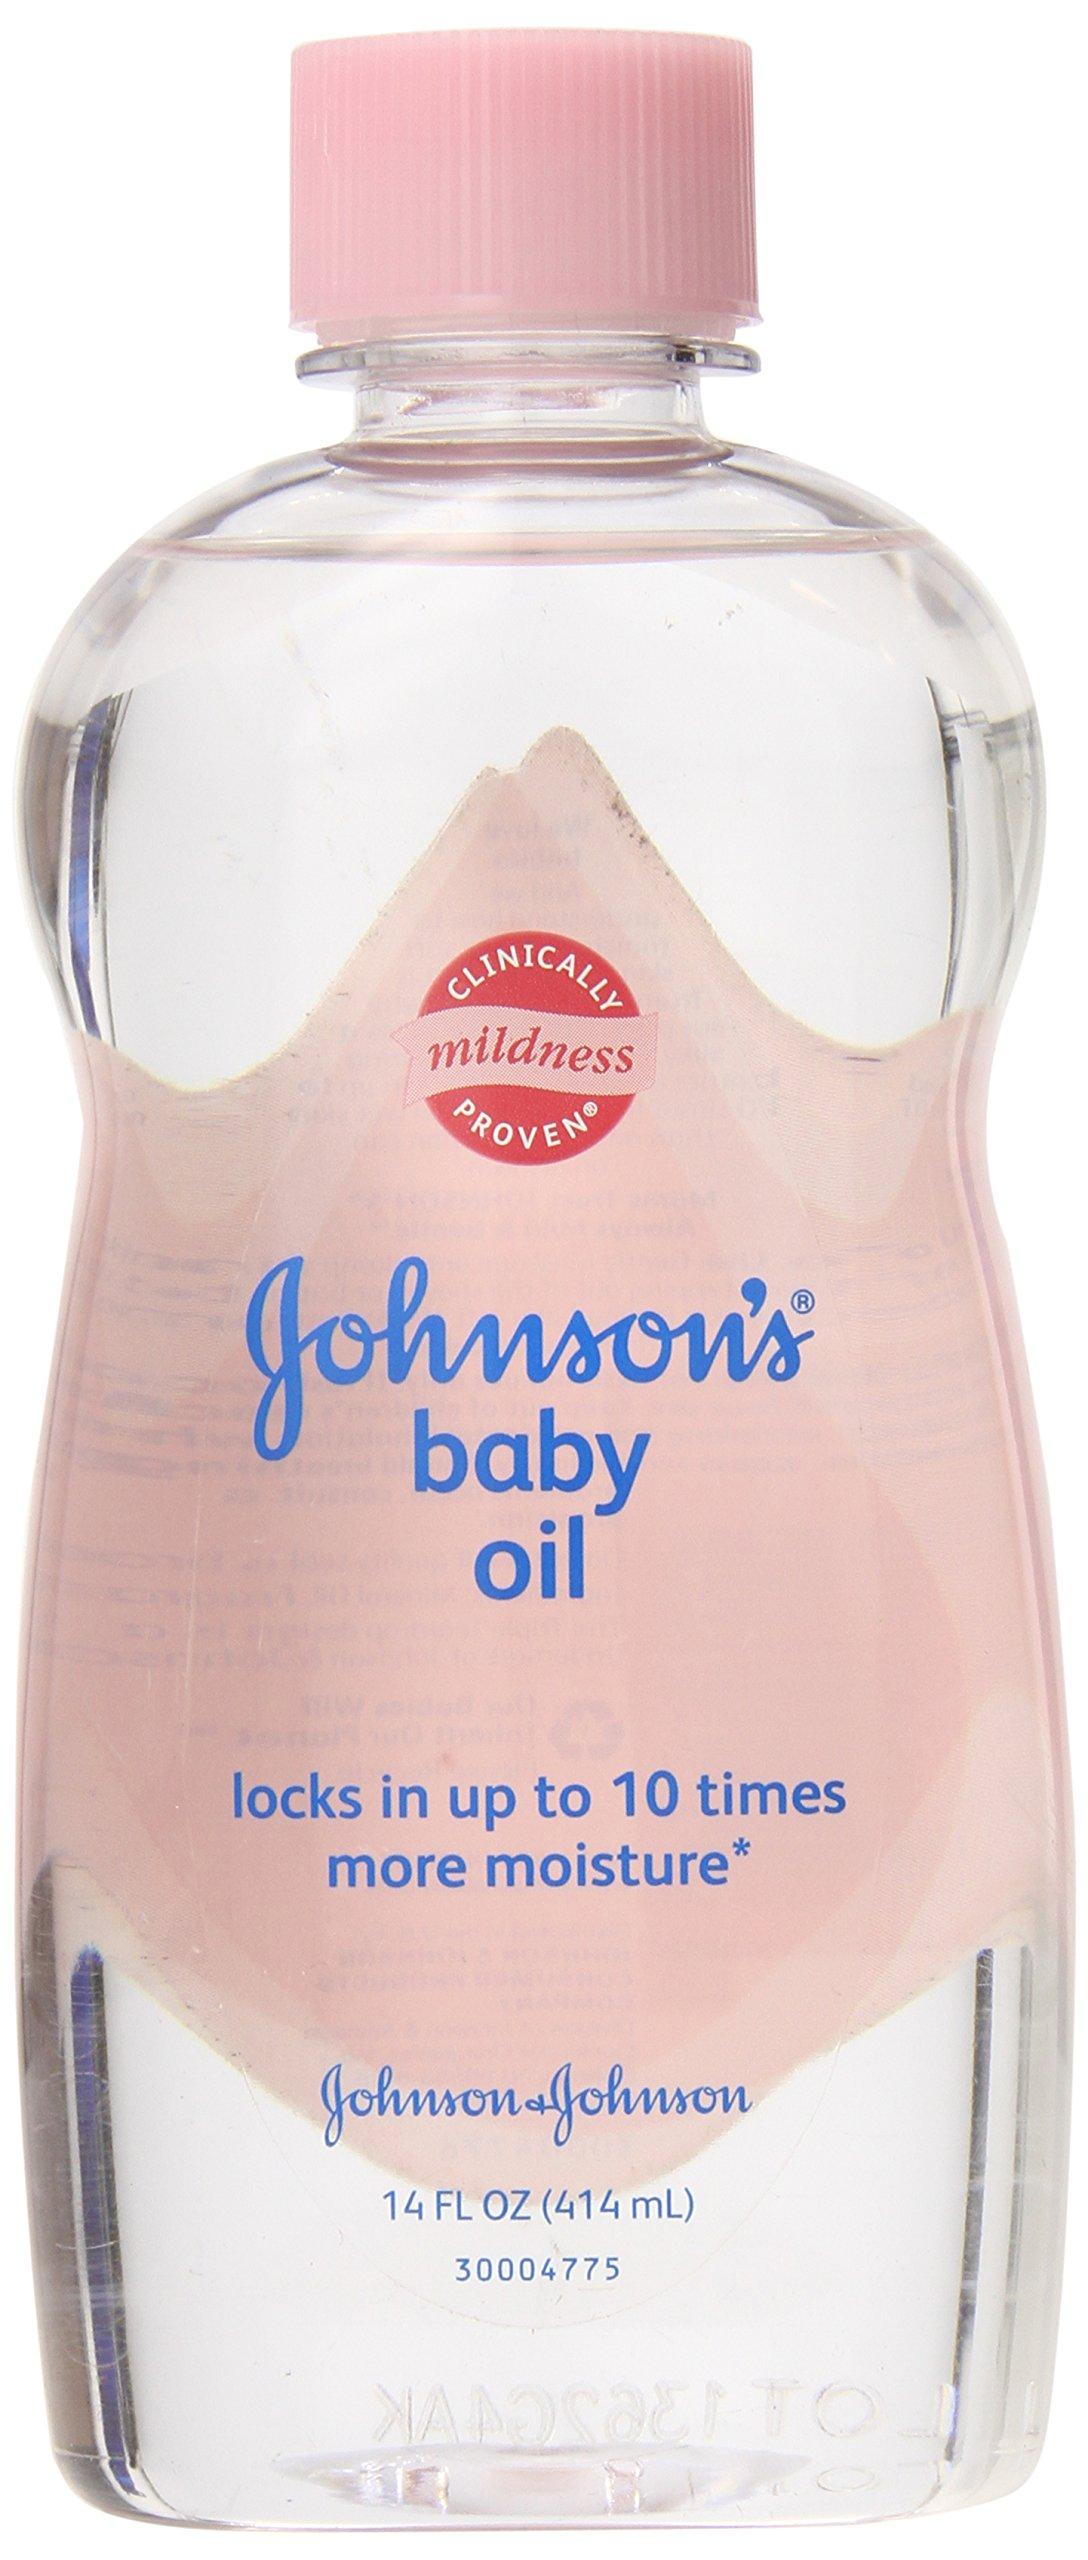 JOHNSON'S® baby oil